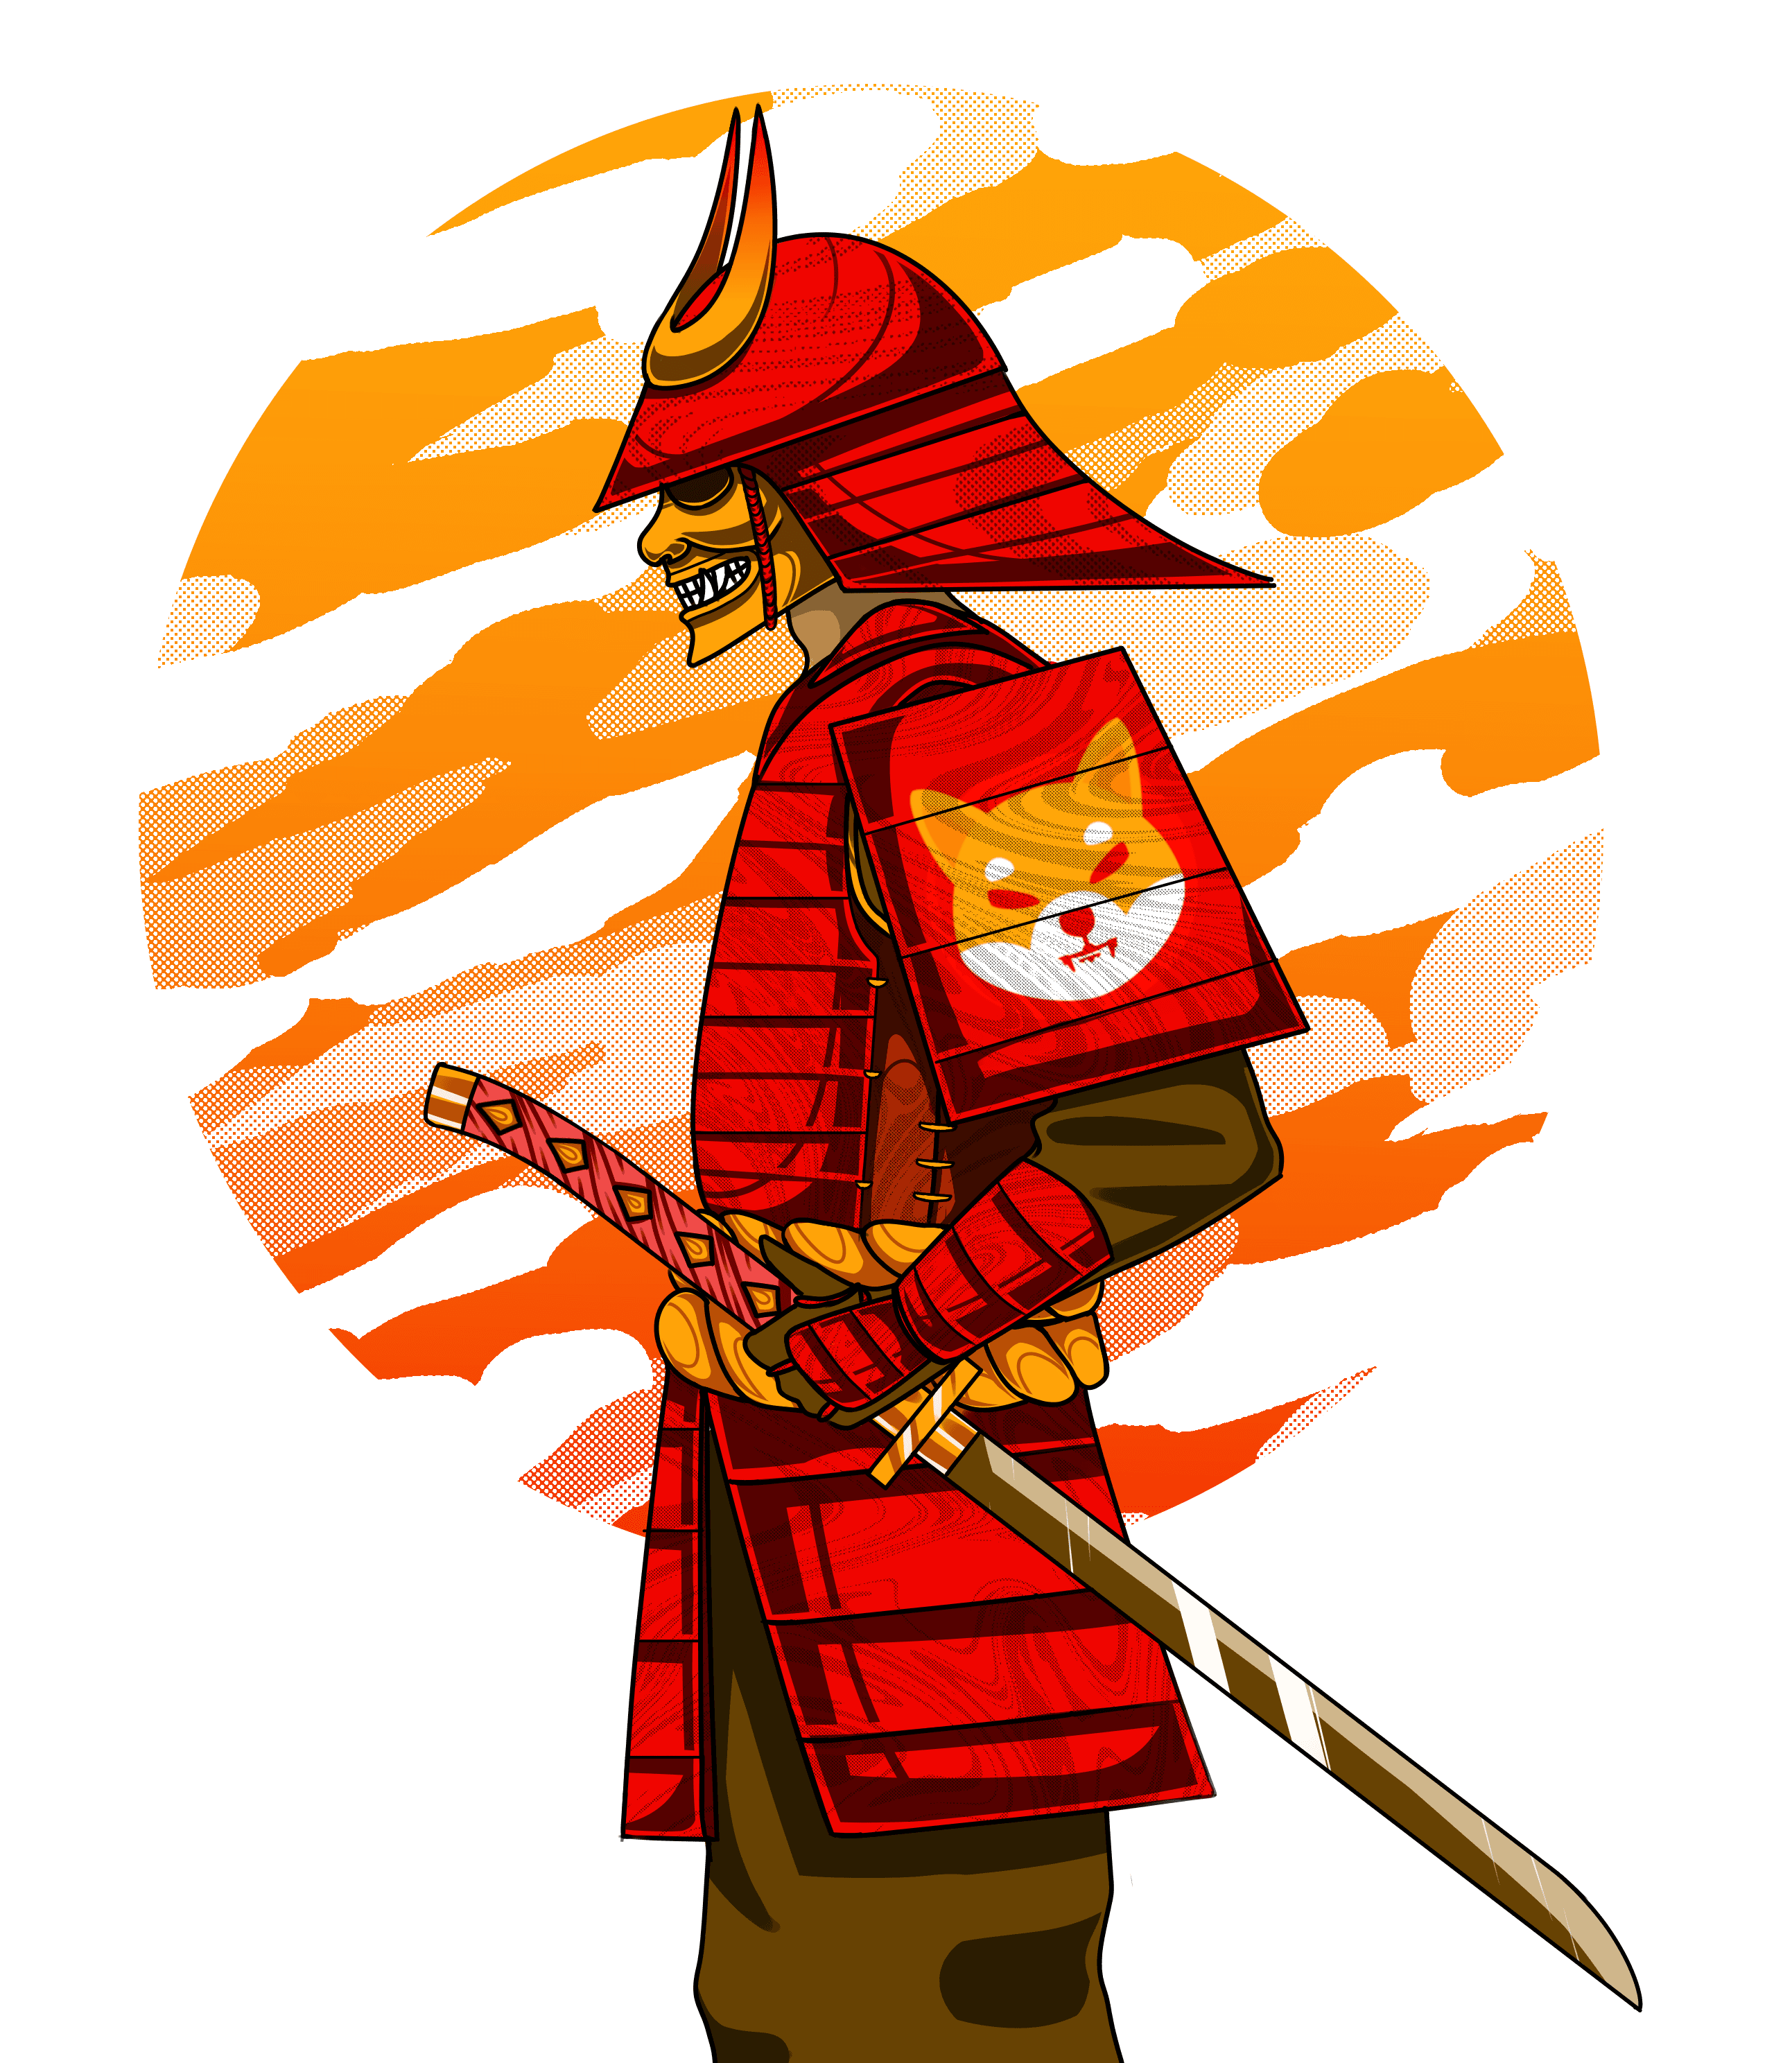 Floki Shibashinobi the Samurai Warrior representing Team Shiba Inu Blockchain Video Game Art